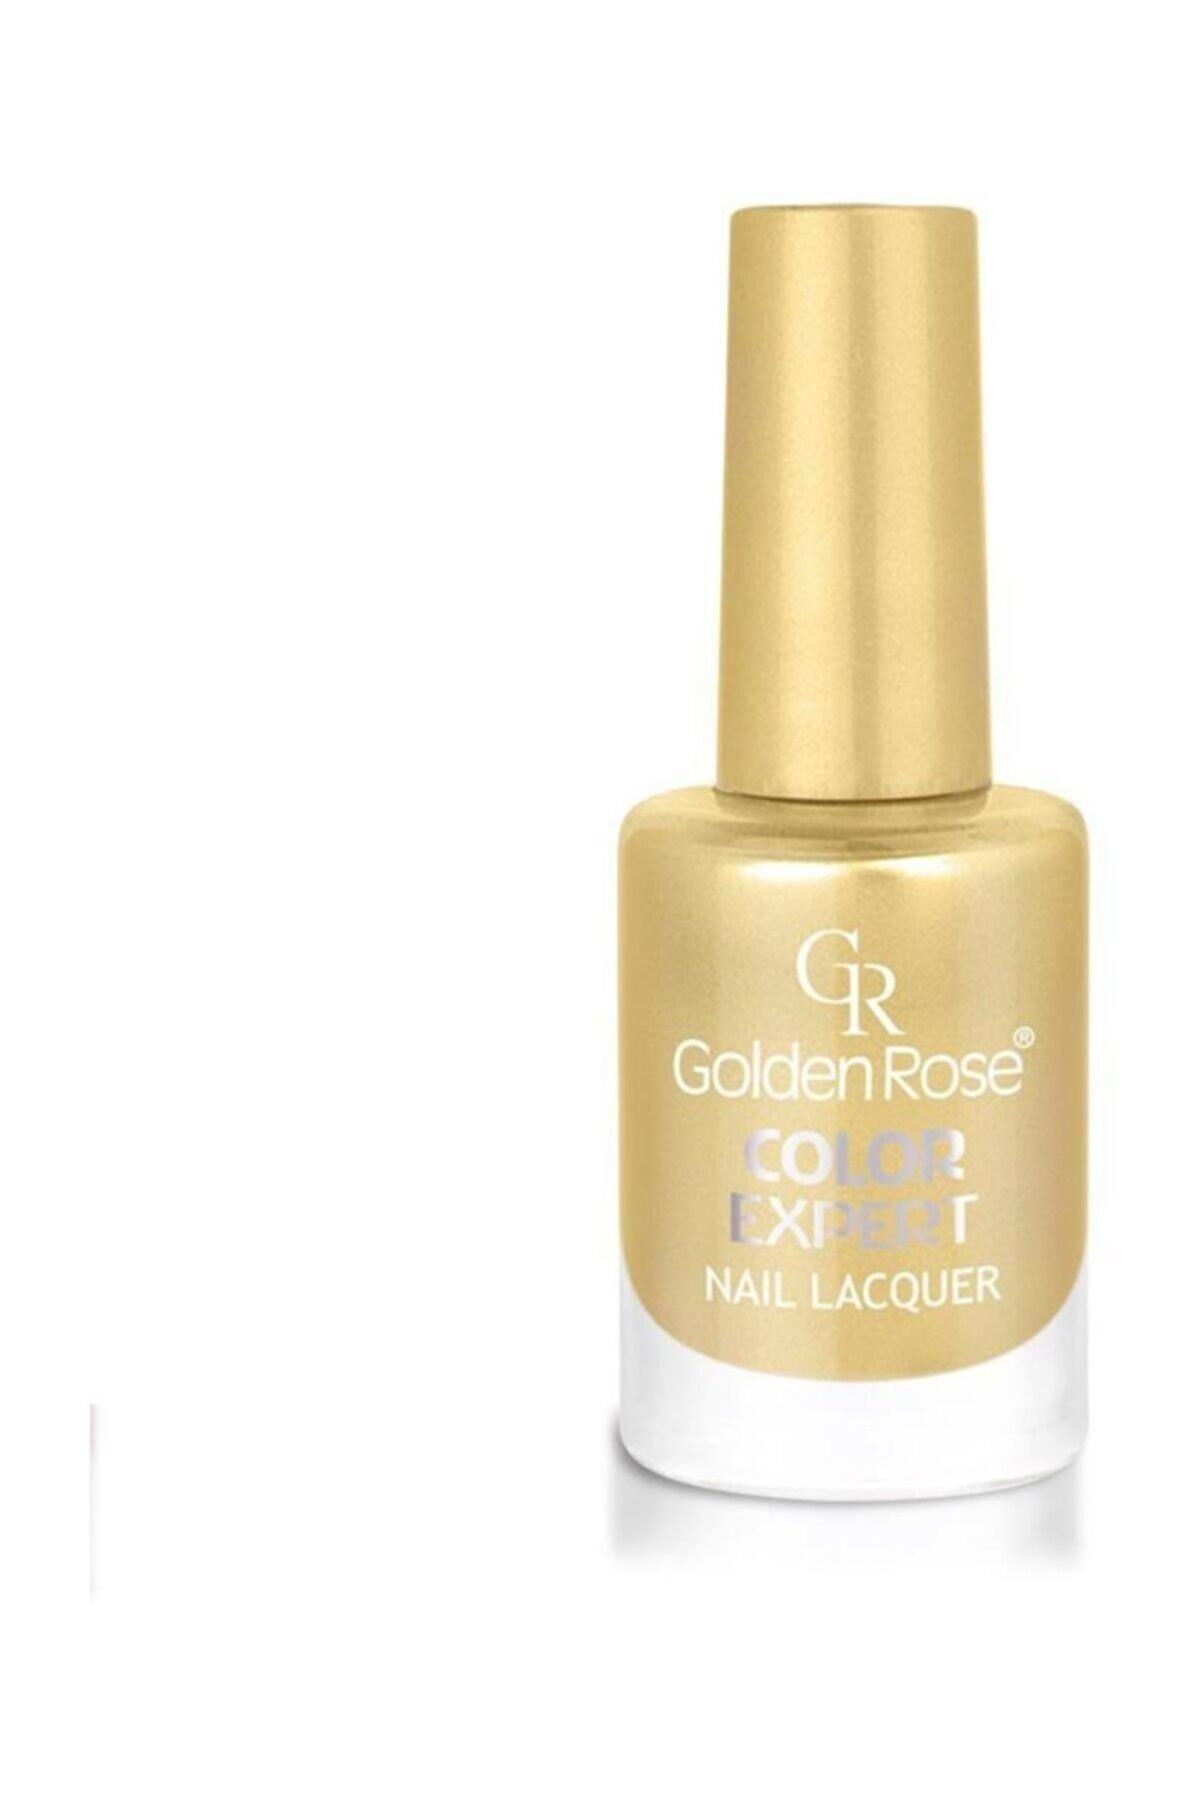 Golden Rose Oje - Color Expert Nail Lacquer No: 61 Ogcx